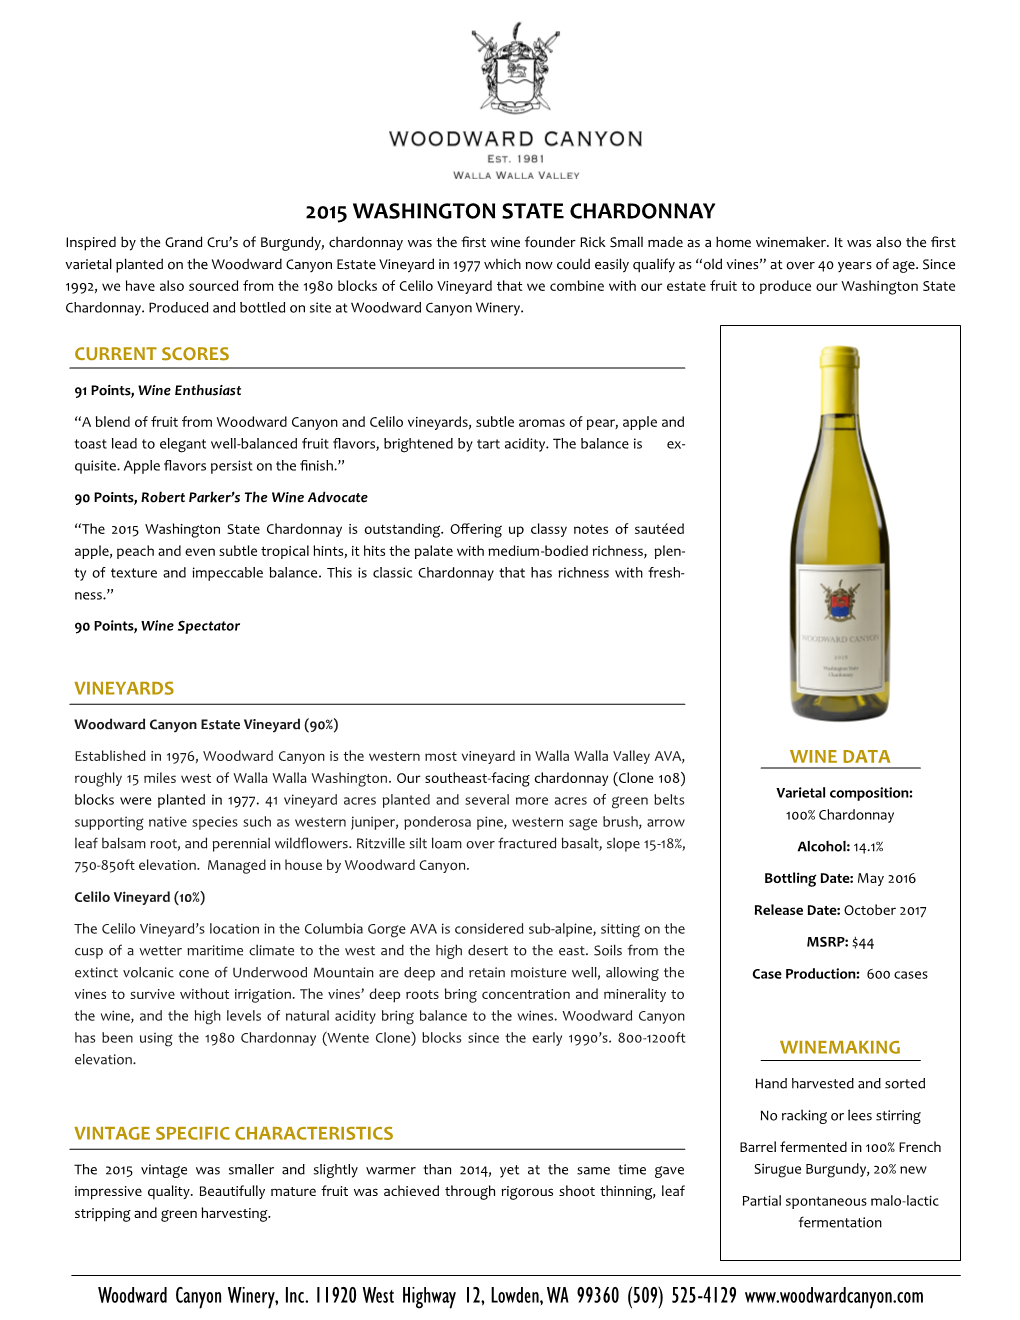 Woodward Canyon Winery, Inc. 11920 West Highway 12, Lowden, WA 99360 (509) 525-4129